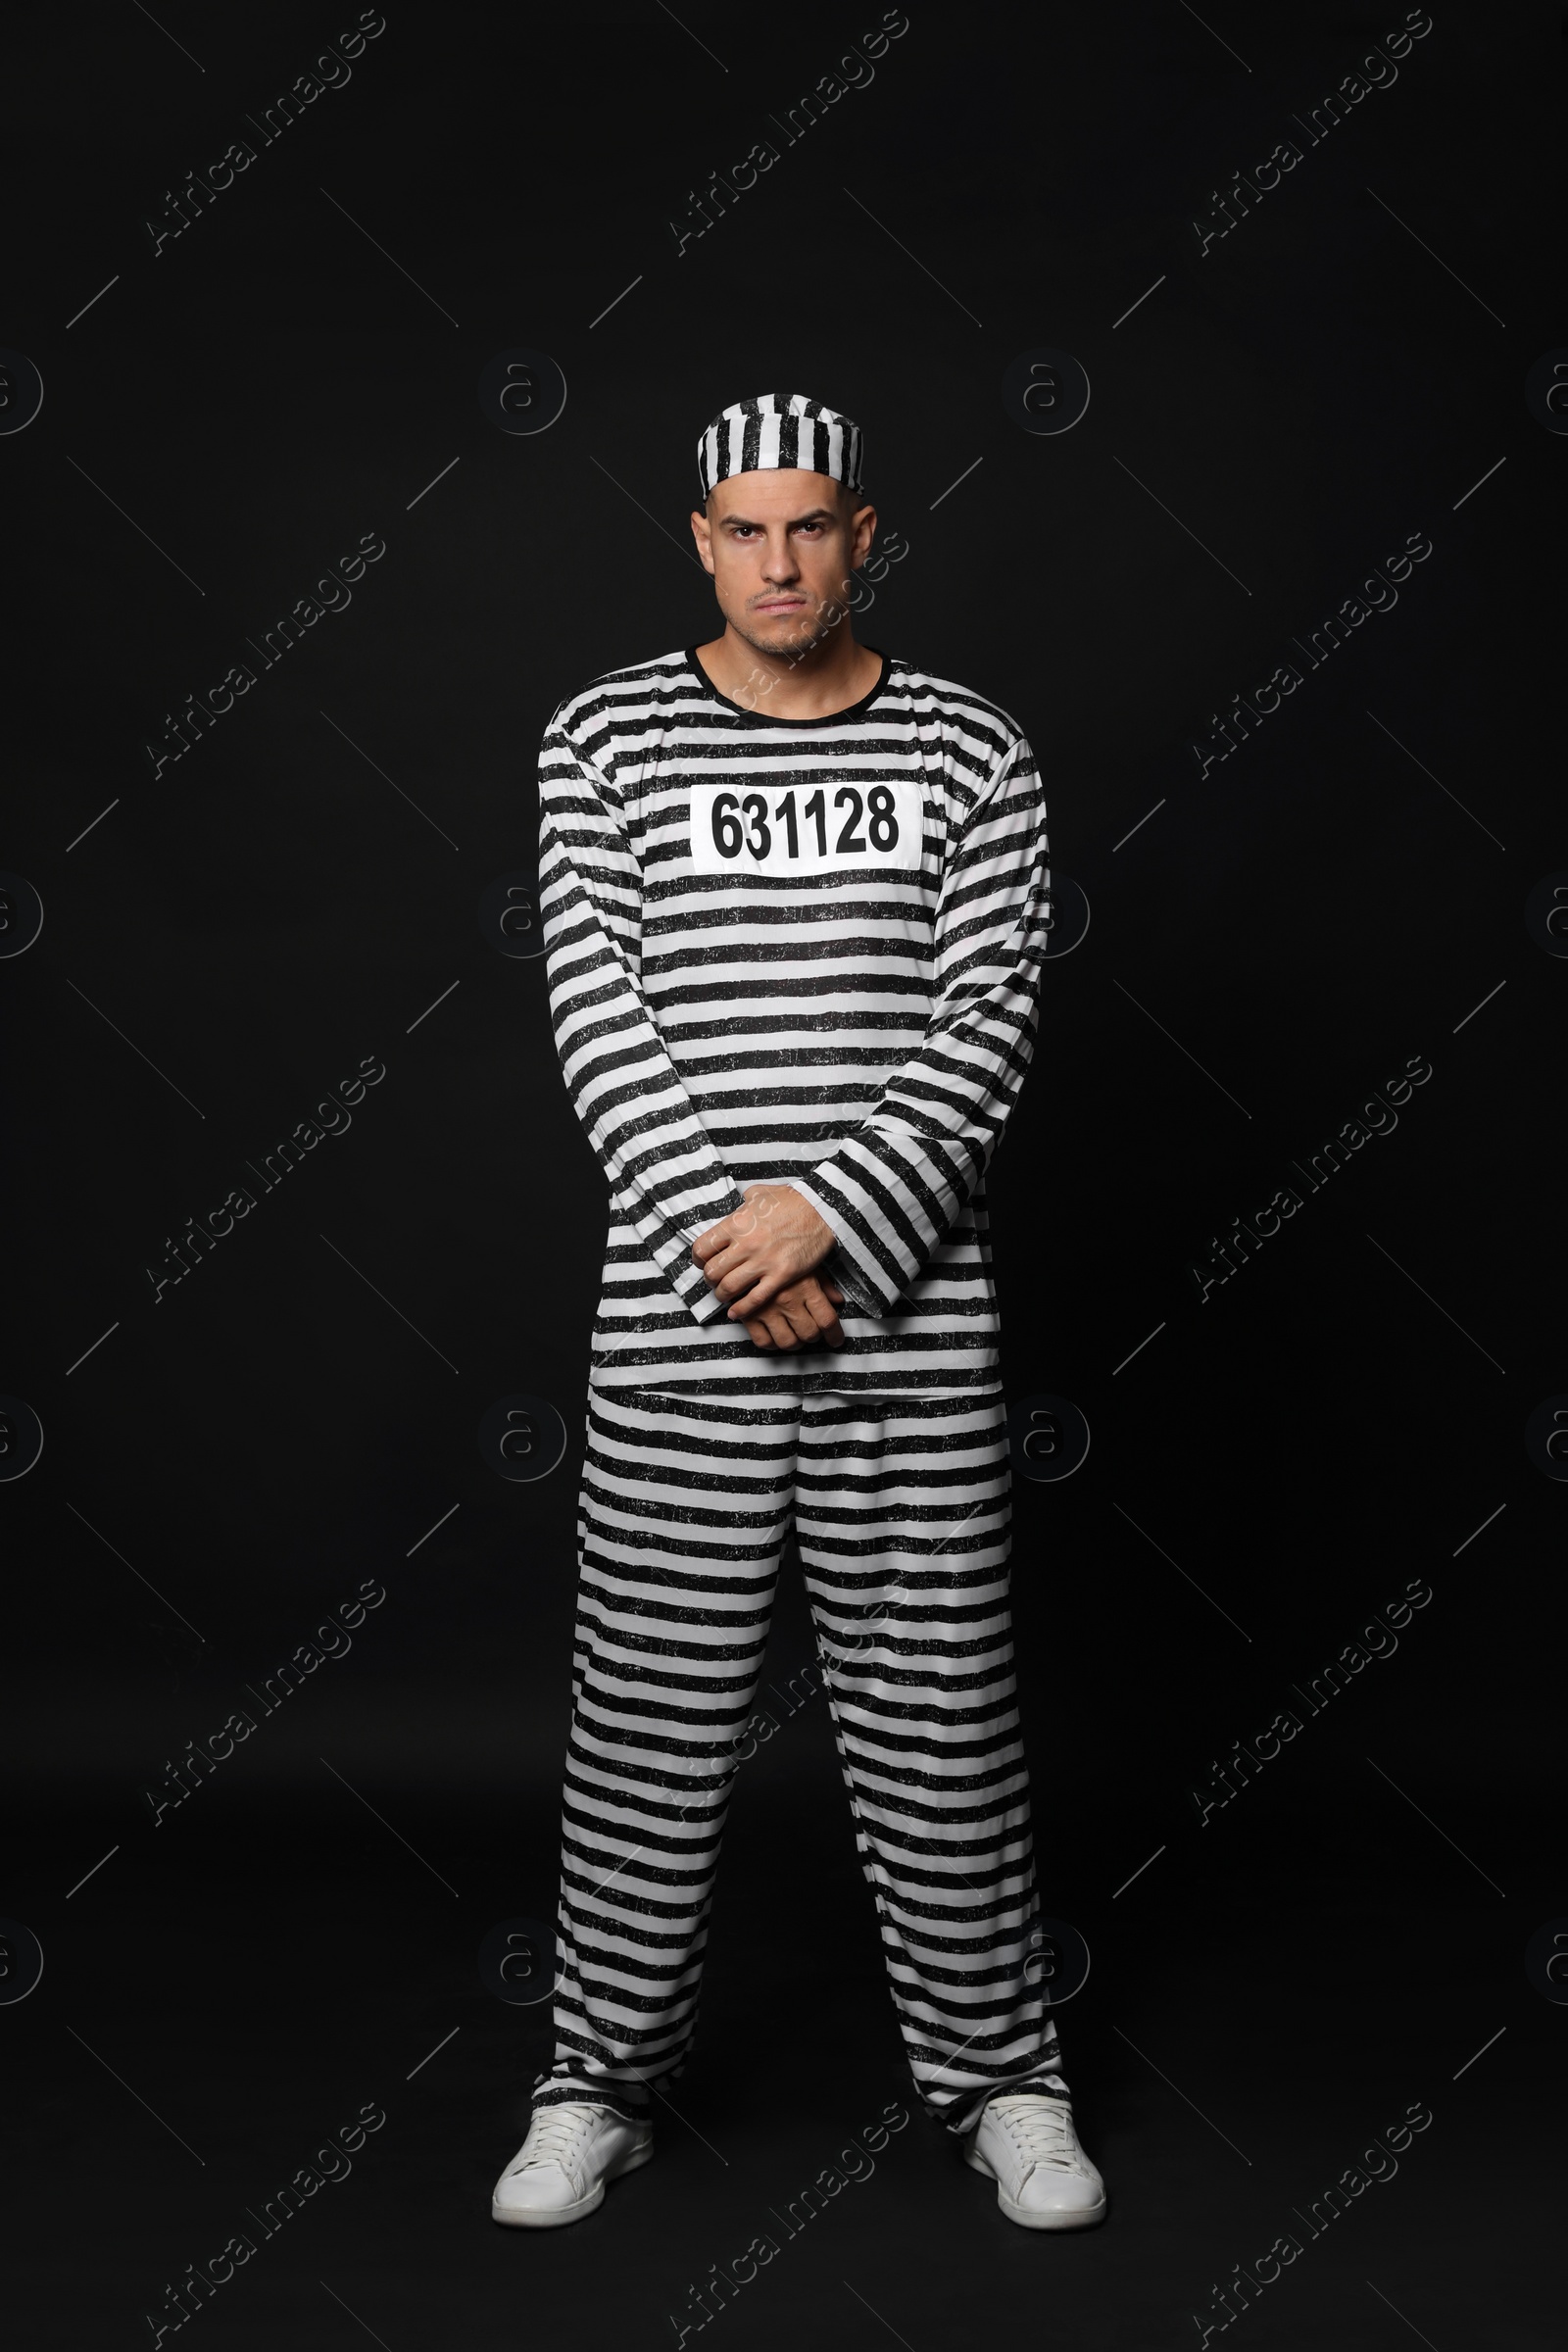 Photo of Prisoner in striped uniform on black background